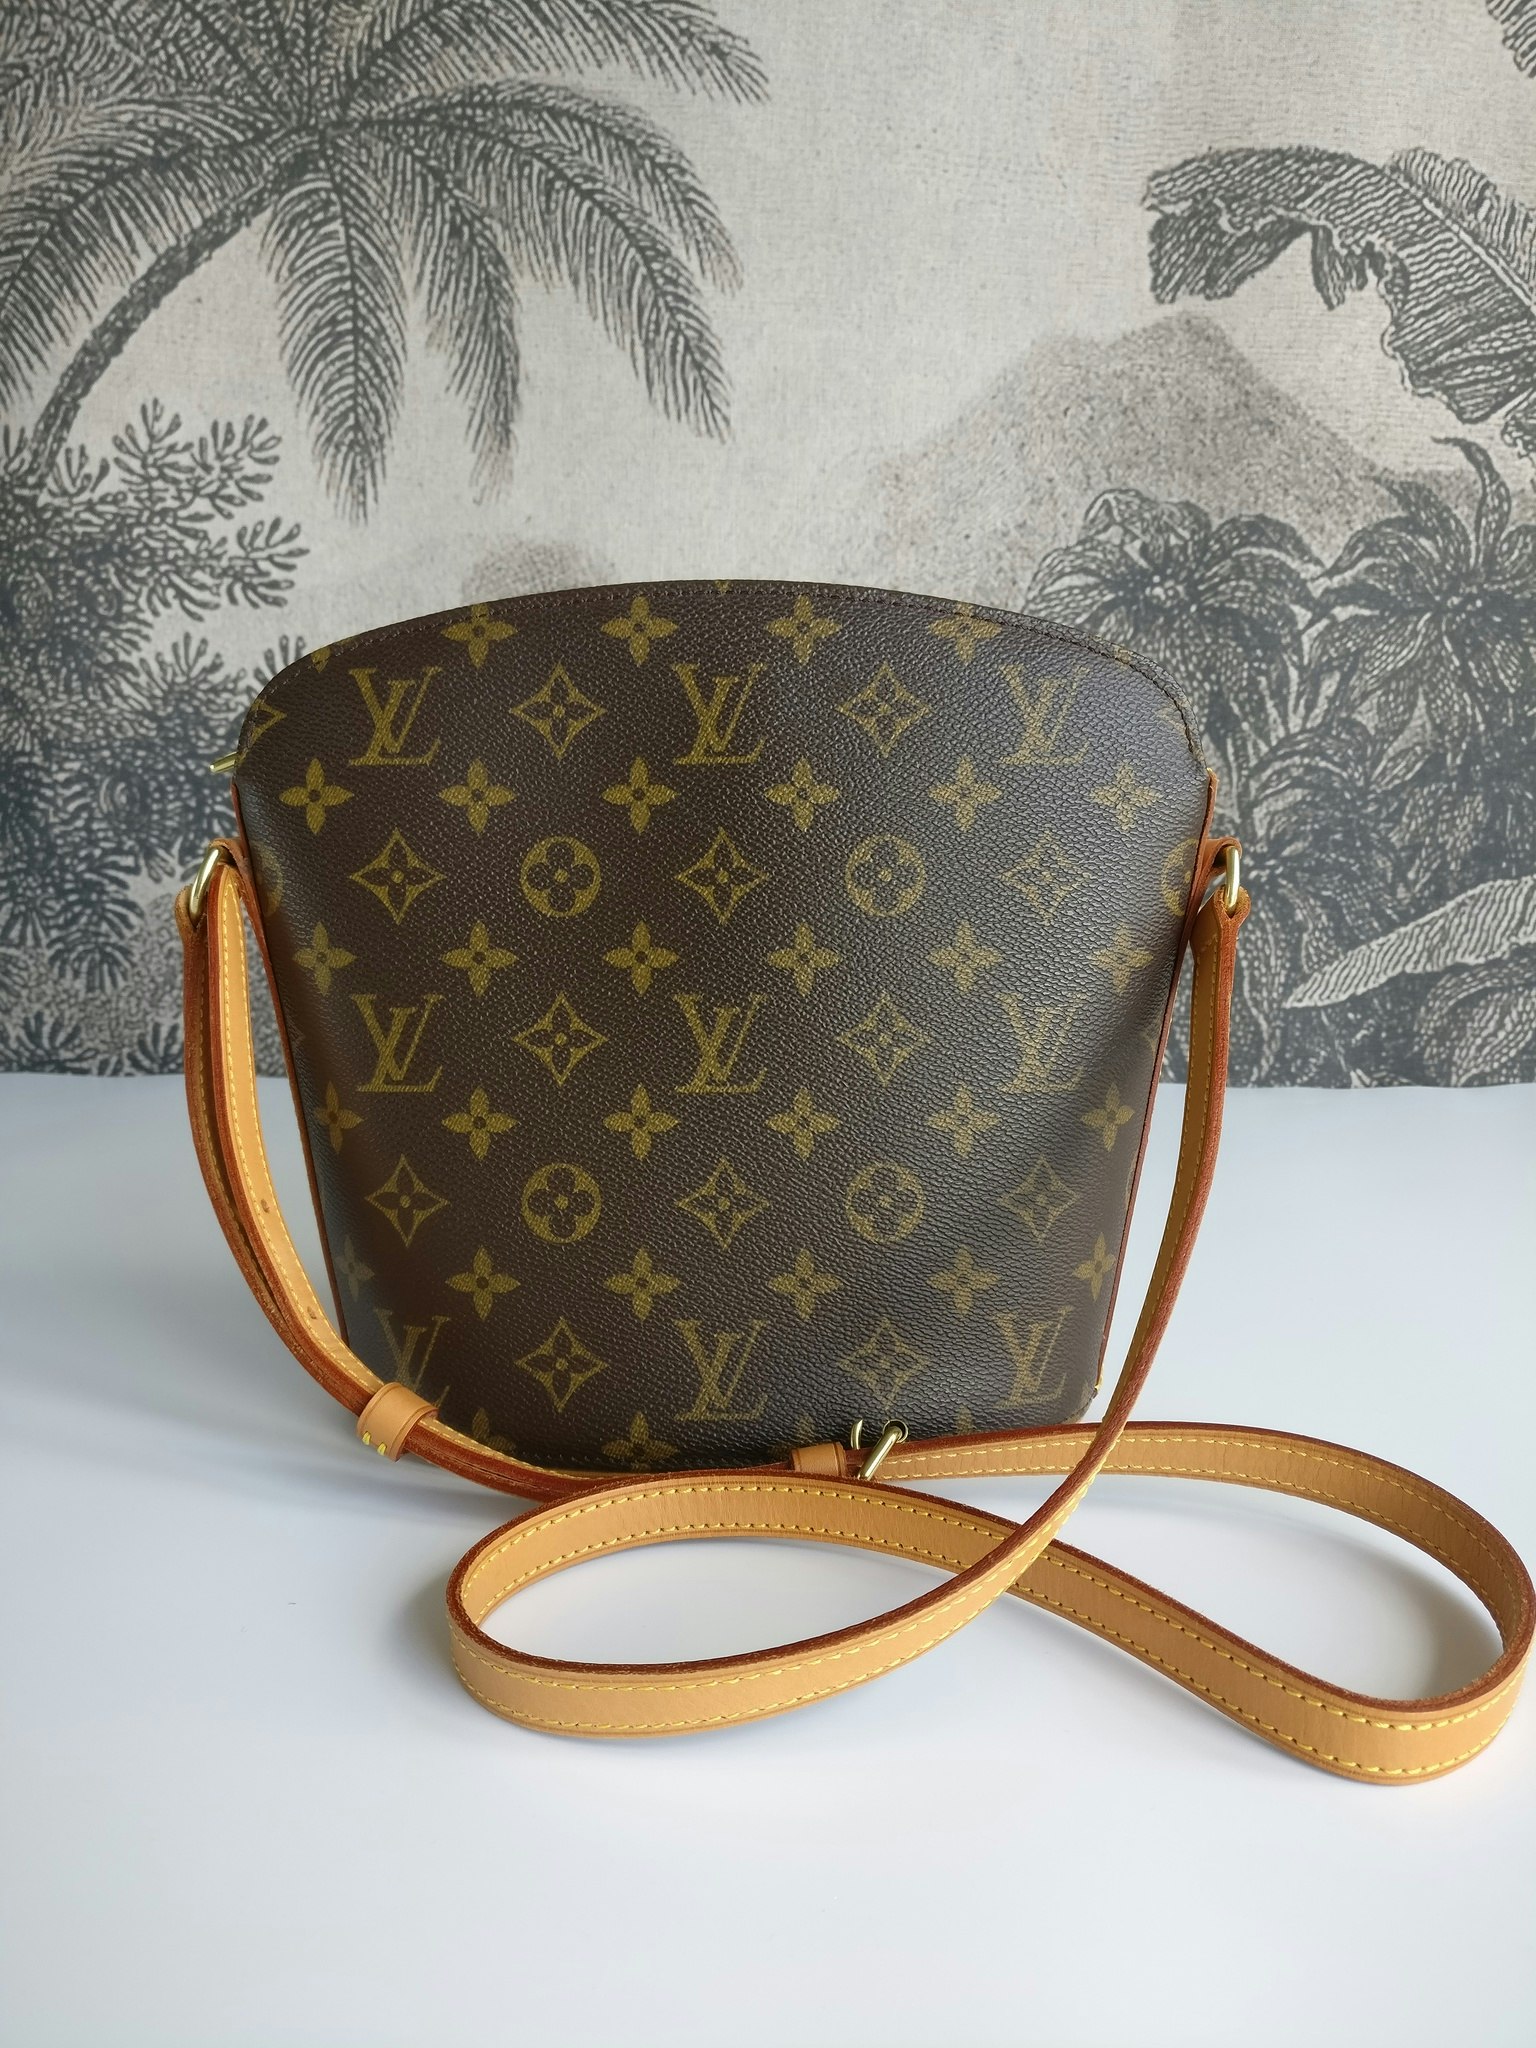 Princesspauonlineshoppe Main Page - ❗Authenticity Guaranteed❗ Louis Vuitton  Drouot Monogram Crossbody Bag! ❤️ 💌send DM for inquiries #lv #lvbag # louisvuitton #baglover #bagcollection #bagcollector #luxury #luxurybag  #auth